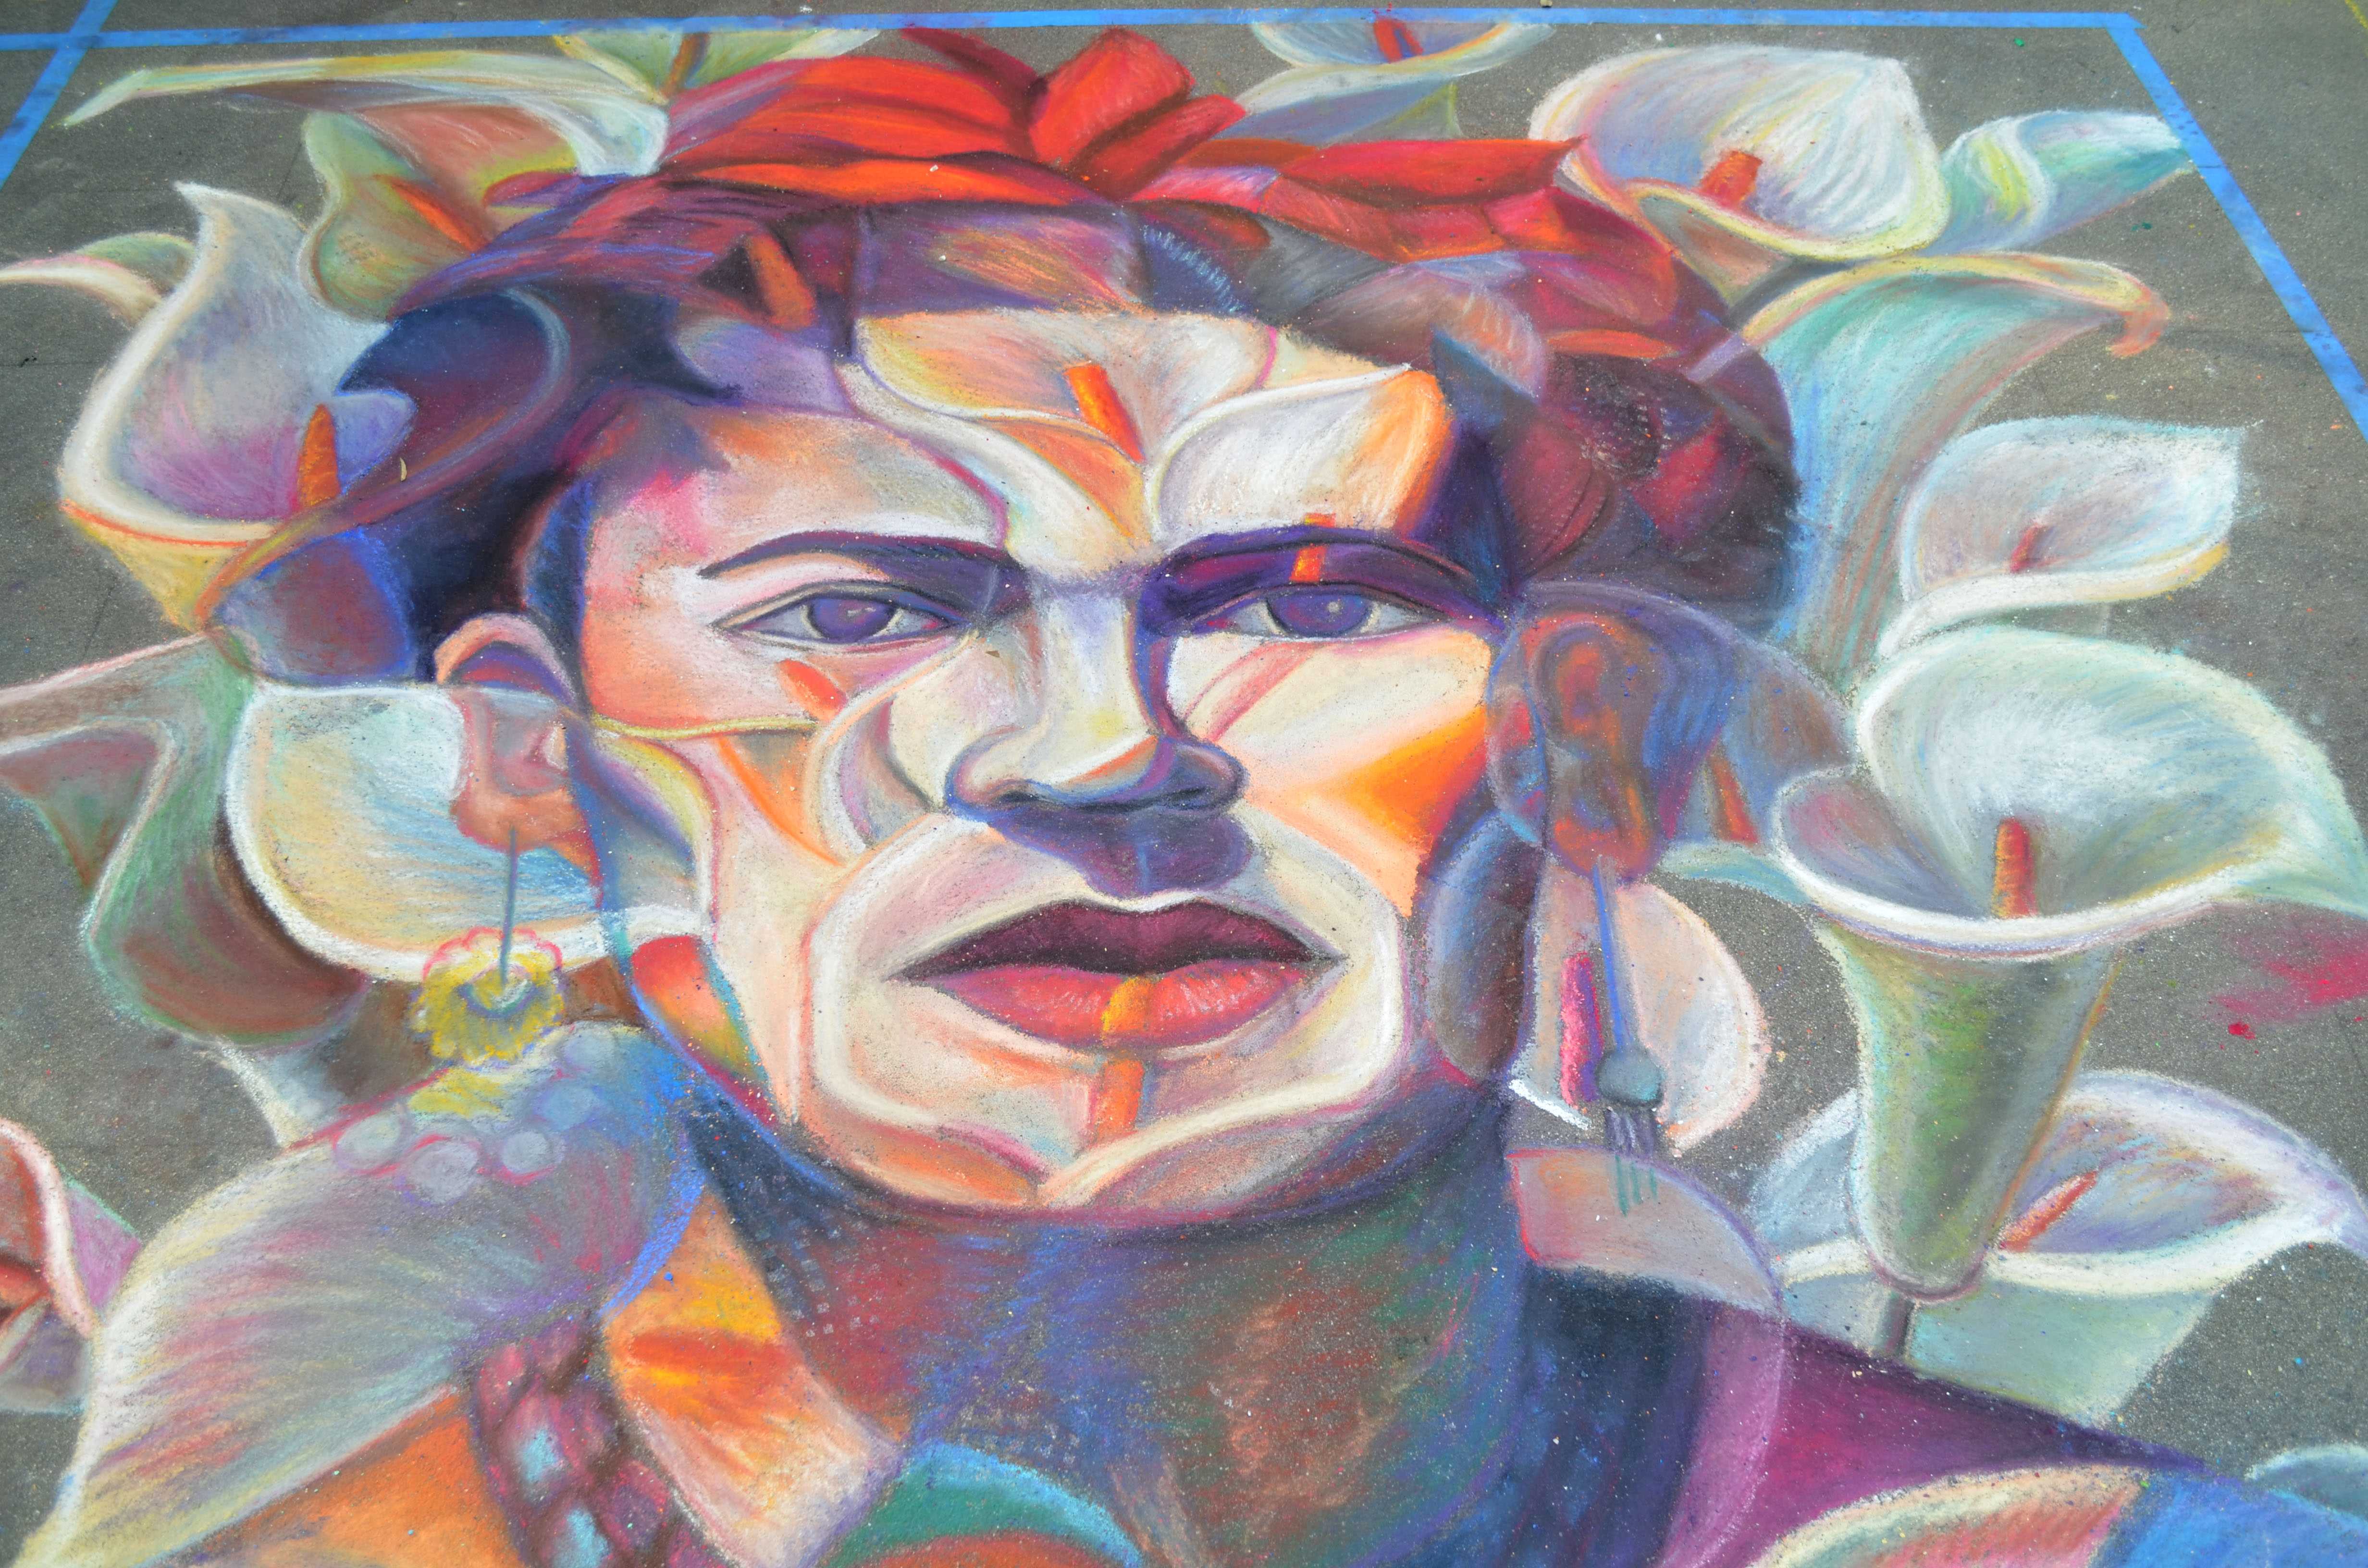 Chalk+portrait+of+Frida+Kahlo+made+of+flowers